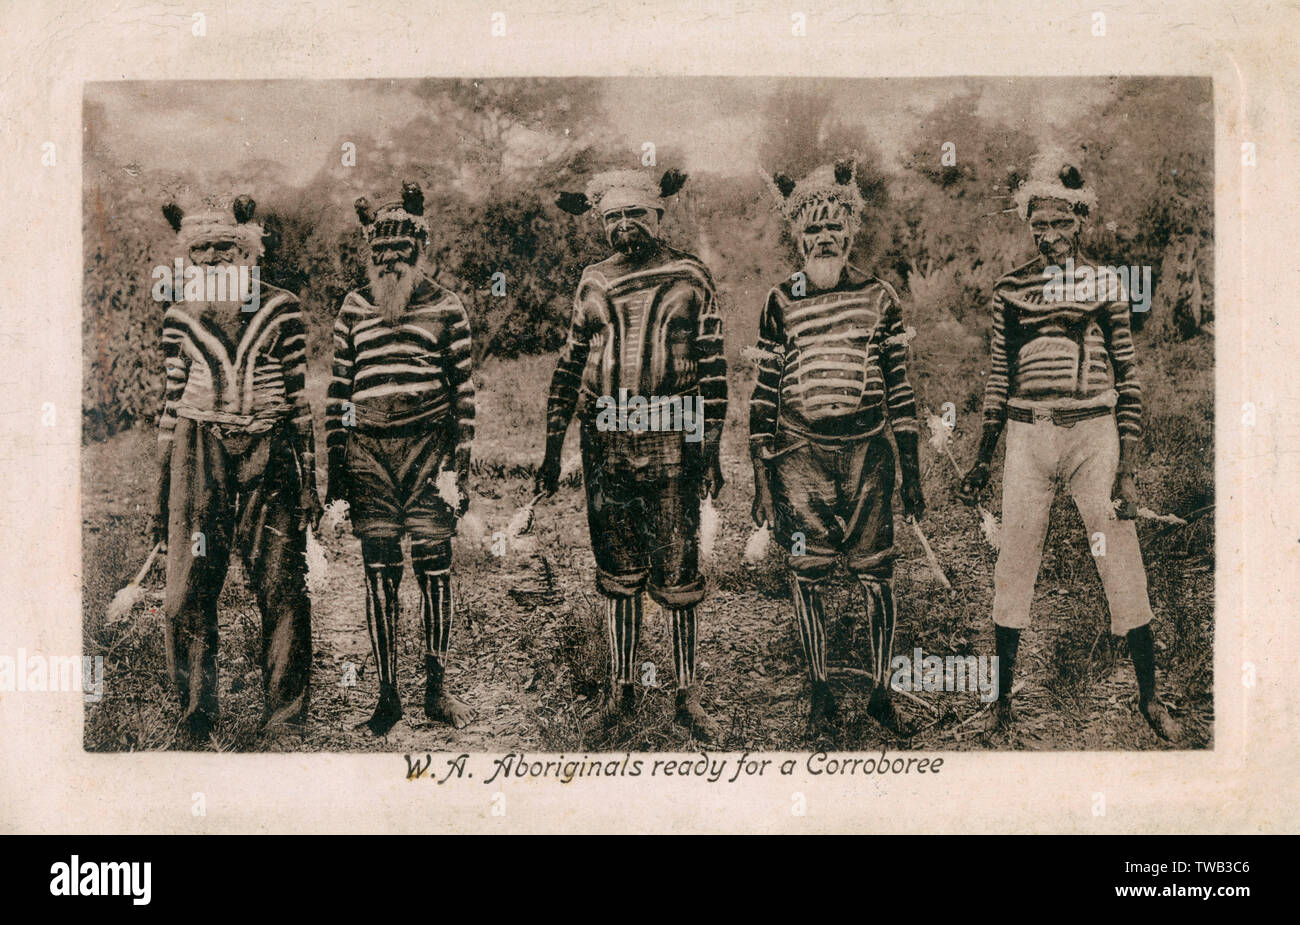 Western Australia, Australia - Five Australian Aborigine Elders ready for a  Corroboree (an an Australian Aboriginal dance